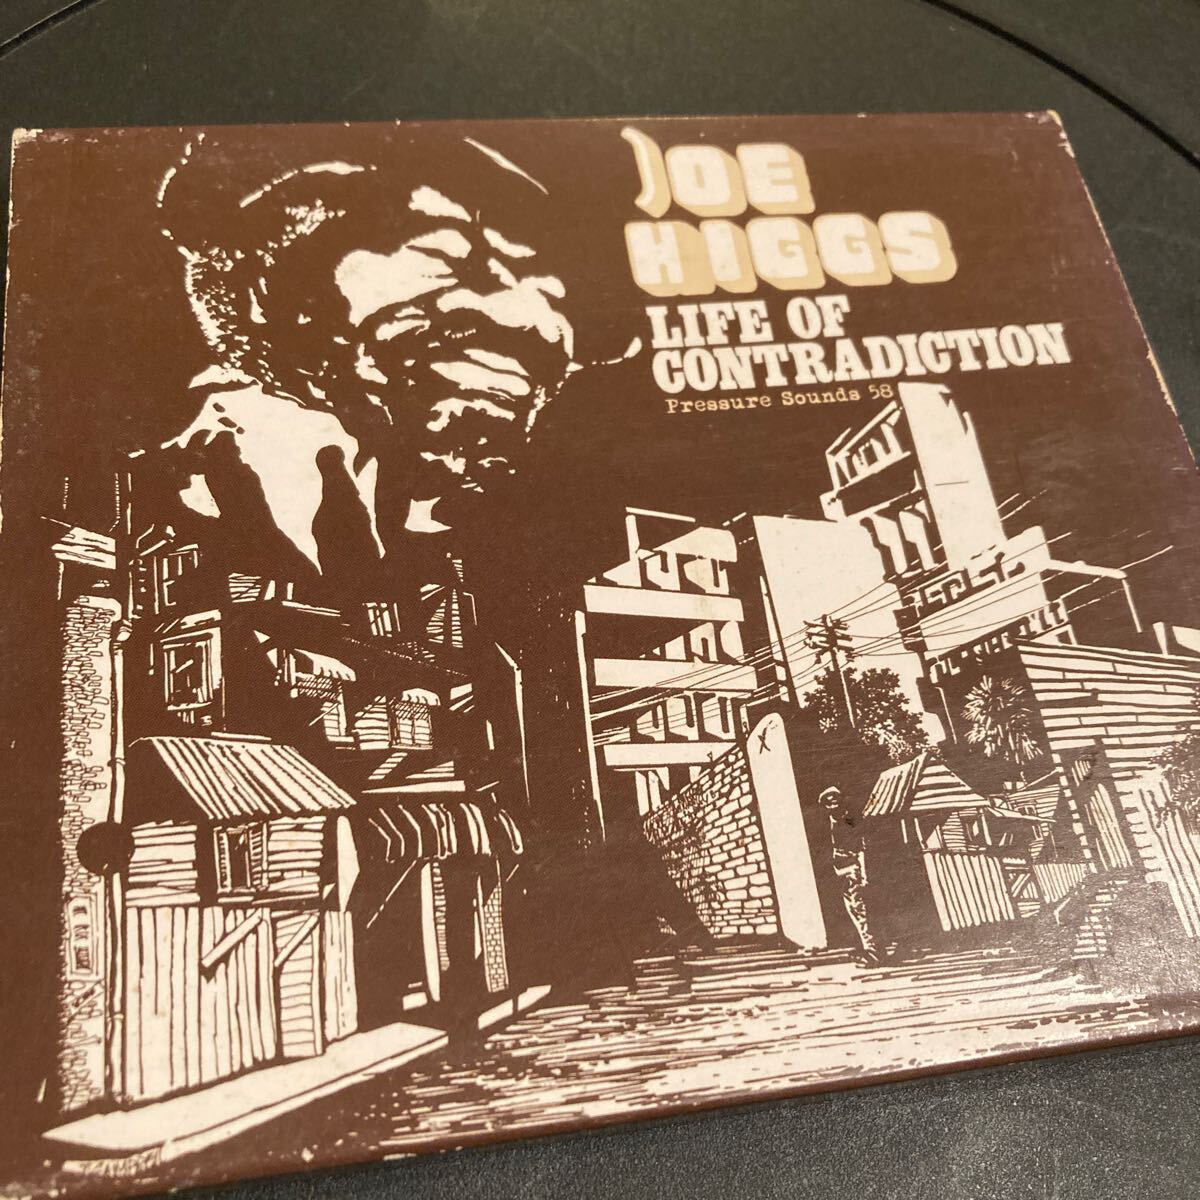 JOE HIGGS / Life Of Contradiction 国内盤 CD REGGAE PRESSURE SOUNDS 58 ルーツレゲエ 帯付き_画像1